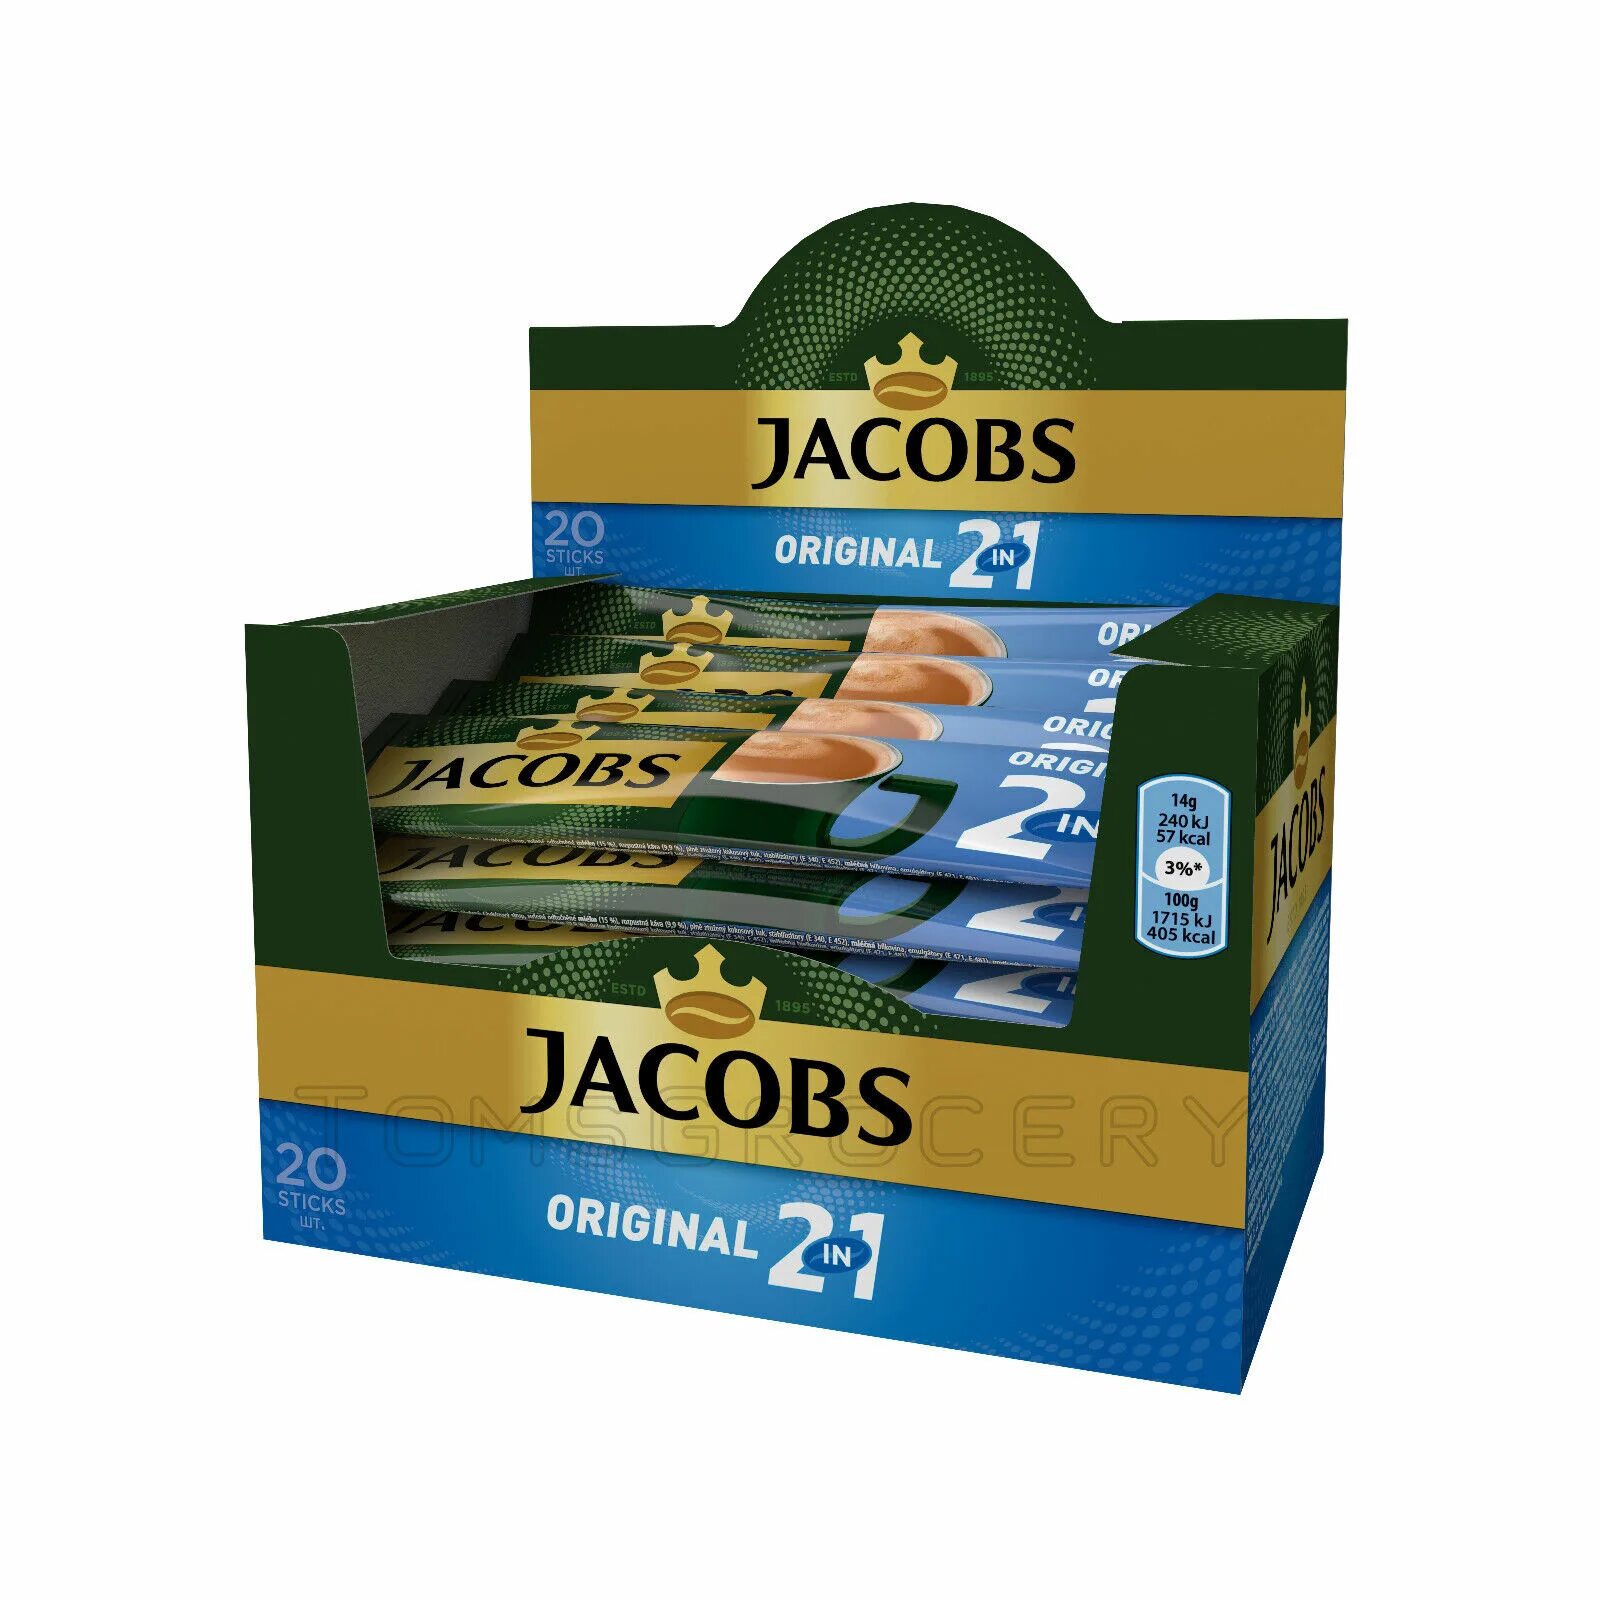 Купить оригинал jacobs. Jacobs 3in1 Original Original стик. Jacobs 2 в 1. Jacobs (2 штуки). Jacobs 2 gr Original.